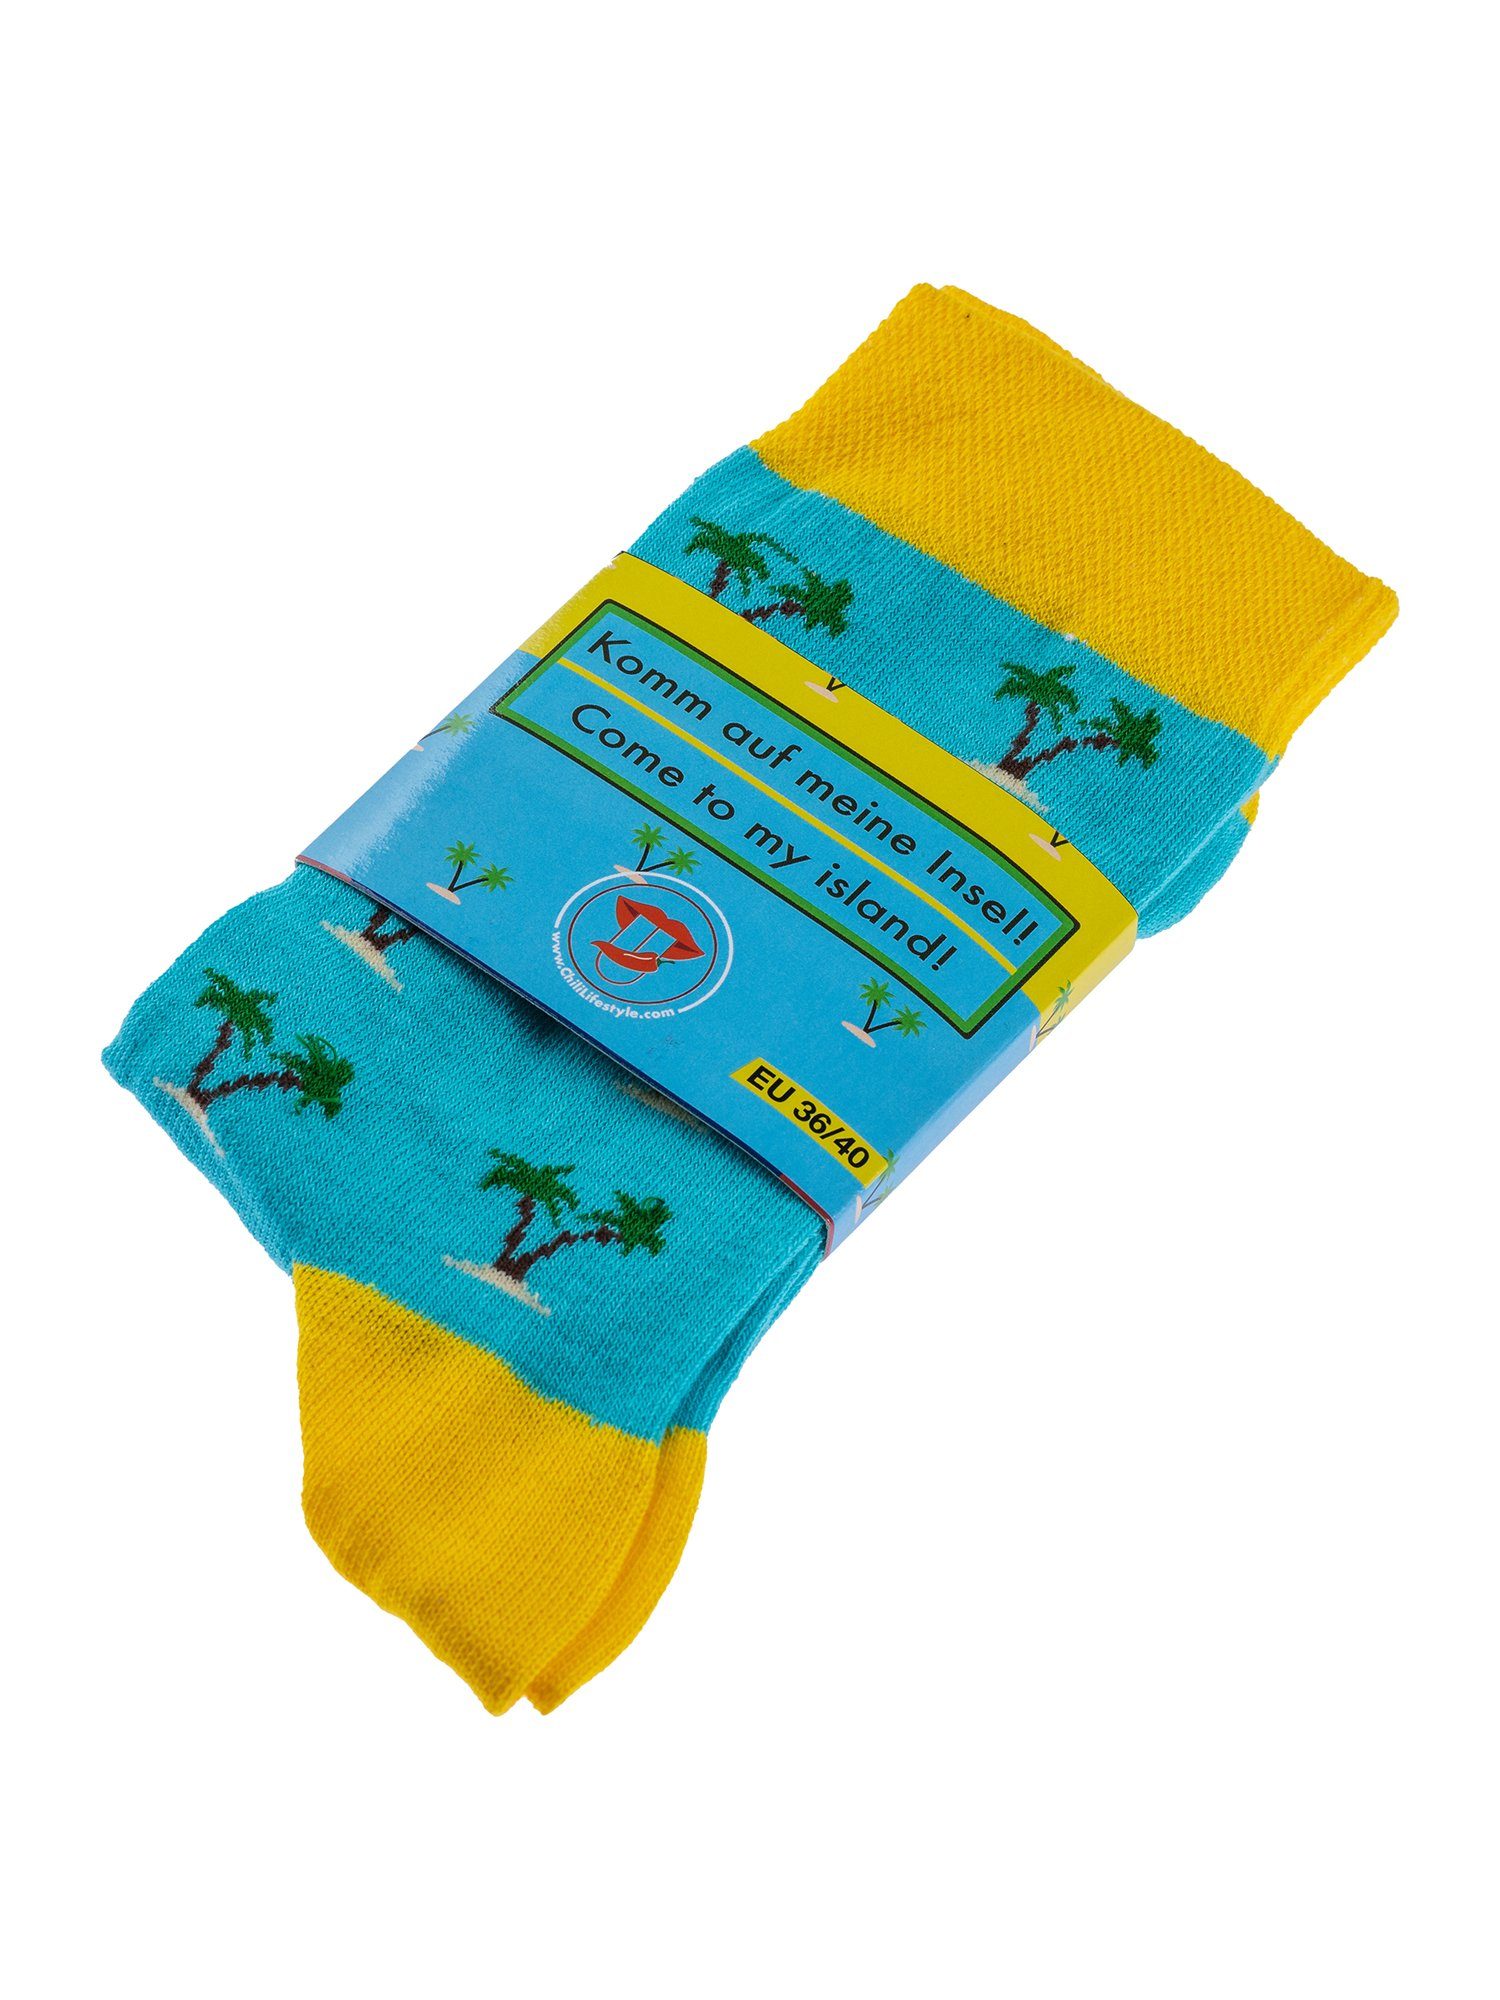 Freizeitsocken Insel Banderole Lifestyle Chili Leisure Socks